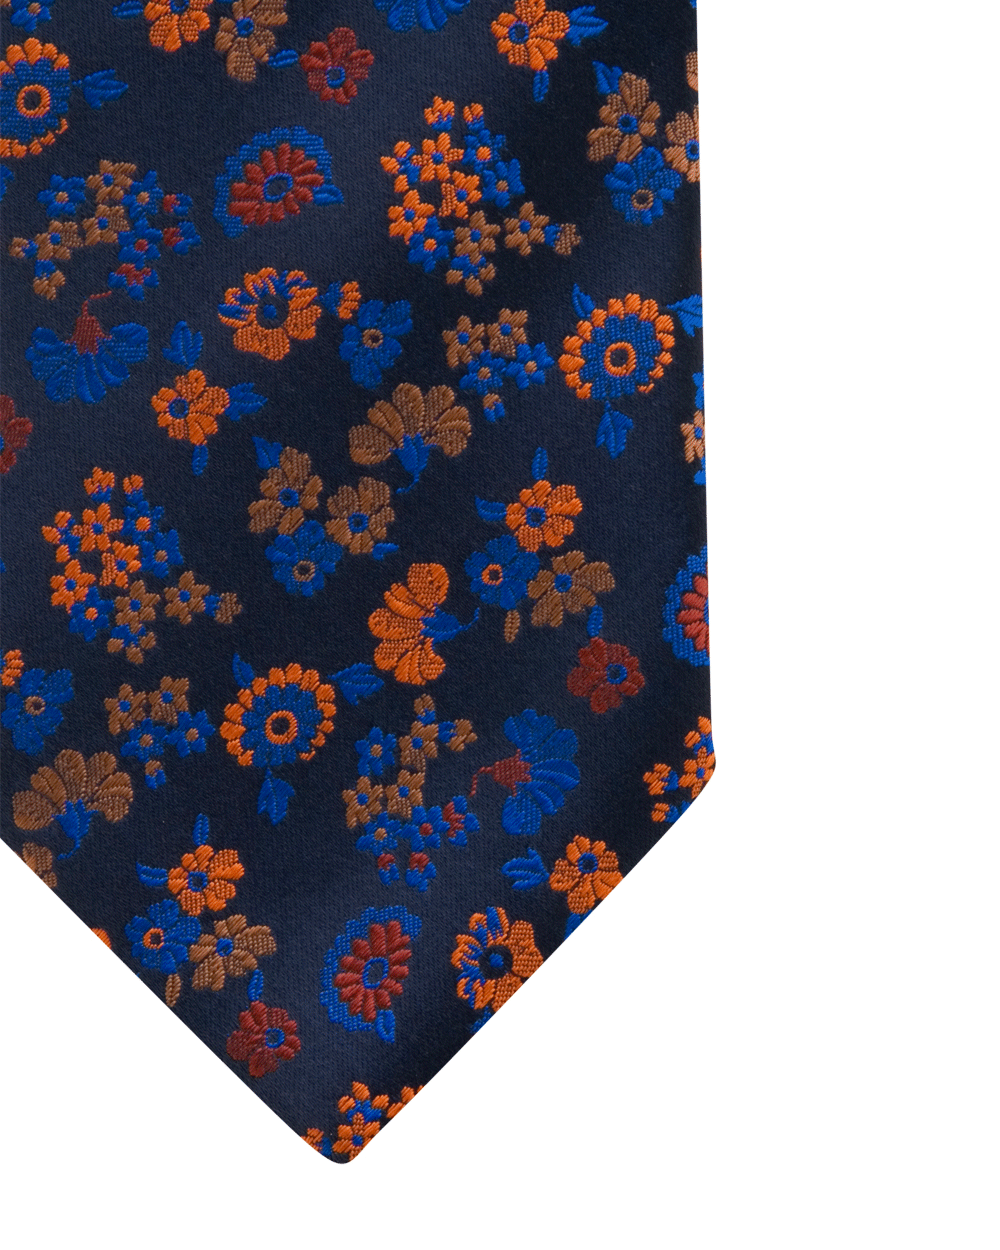 Blue and Orange Floral Tie